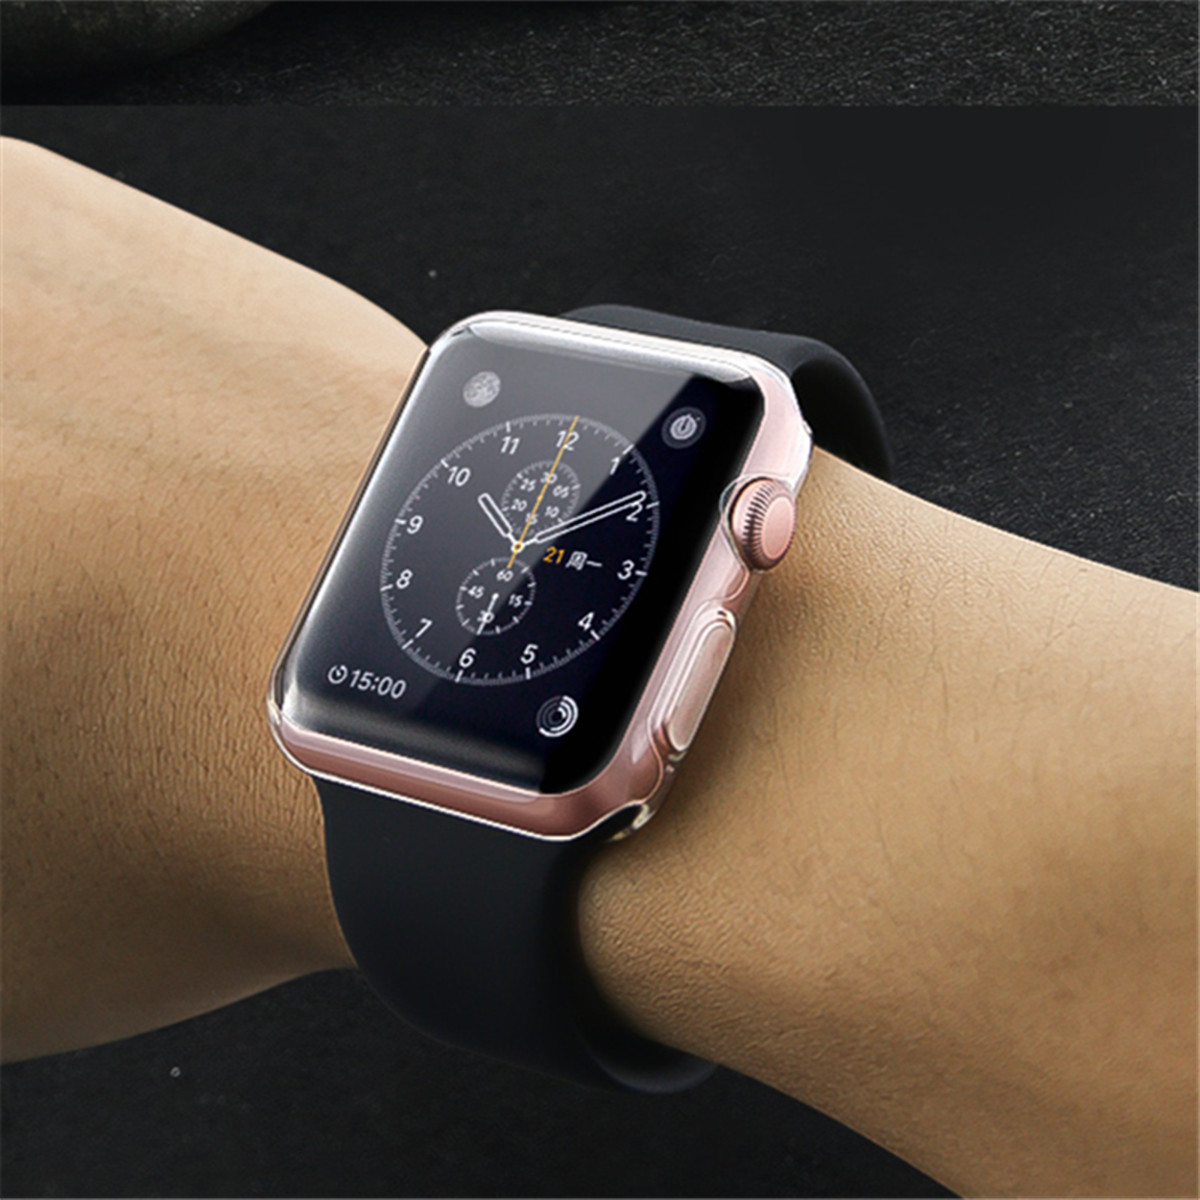 Apple watch 3 38mm. Эпл вотч 6 38мм. Apple watch Series 4 42mm. Эппл вотч женские. Apple watch 4 38 mm.